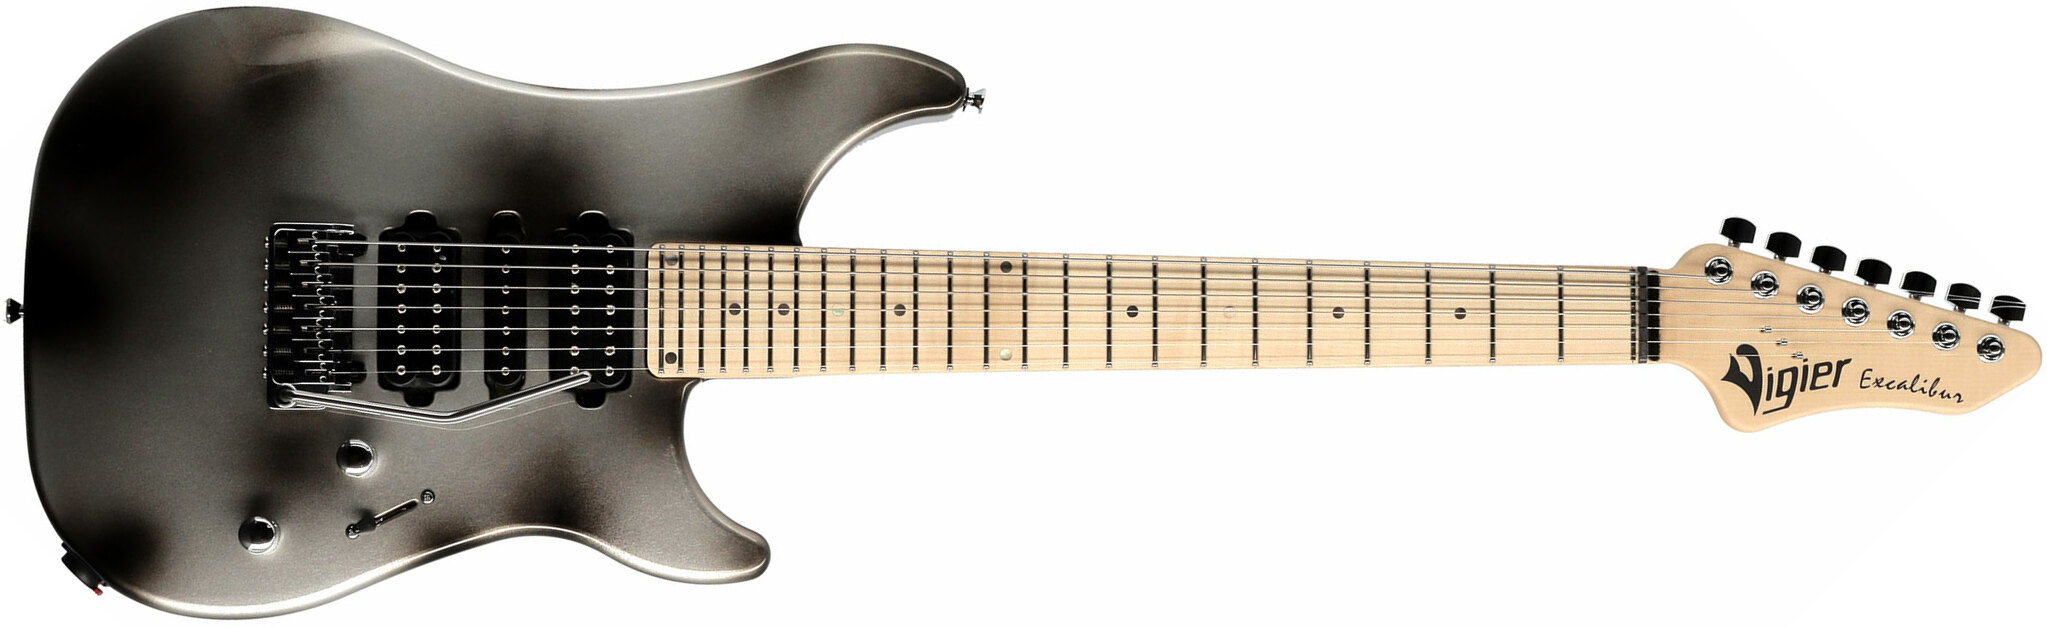 Vigier Excalibur Supra 7c Hsh Trem Mn - Urban Metal - 7 string electric guitar - Main picture